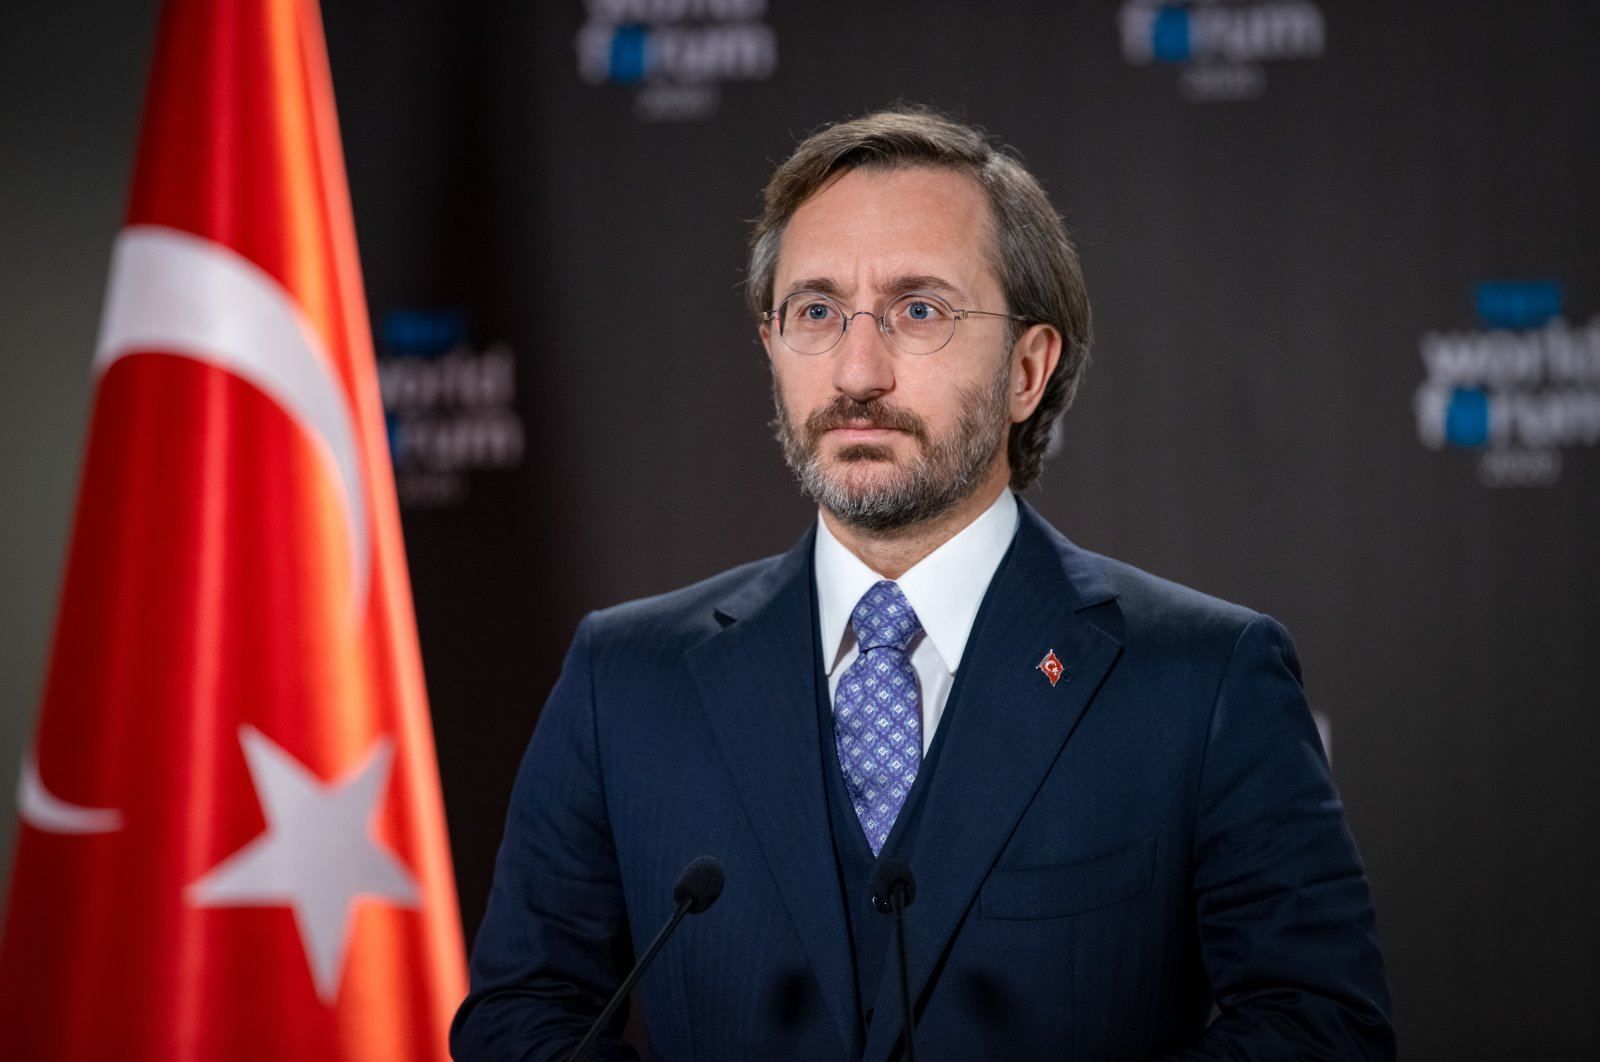 Turkiye strives to help Azerbaijan & Armenia to hammer out just peace